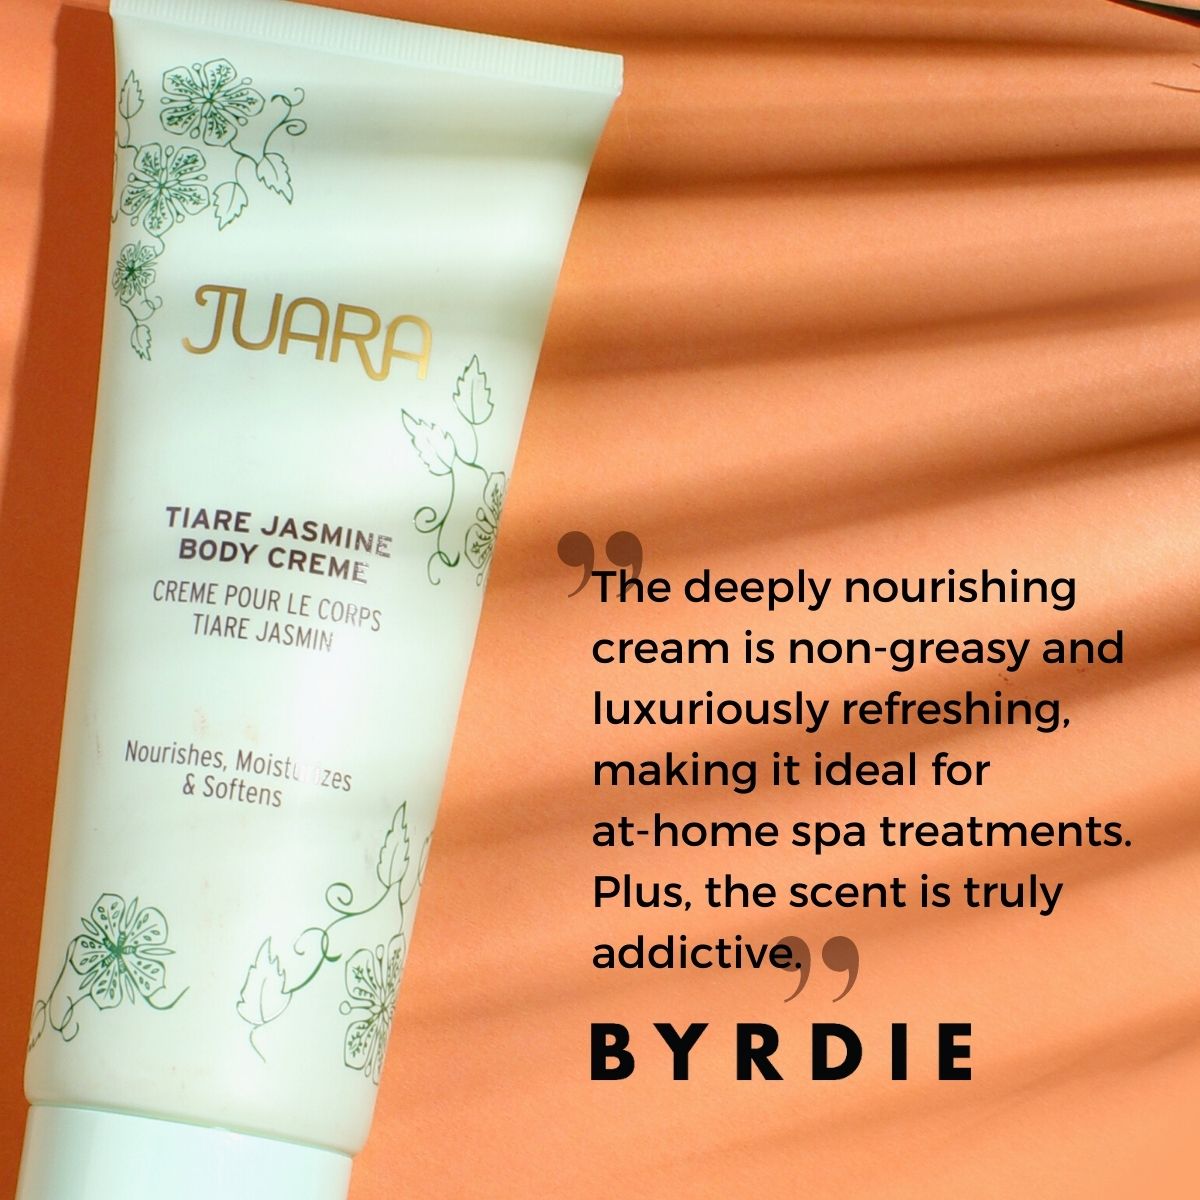 4-Pack Travel Size Tiare Jasmine Body Creme, 1.5 oz from JUARA Skincare